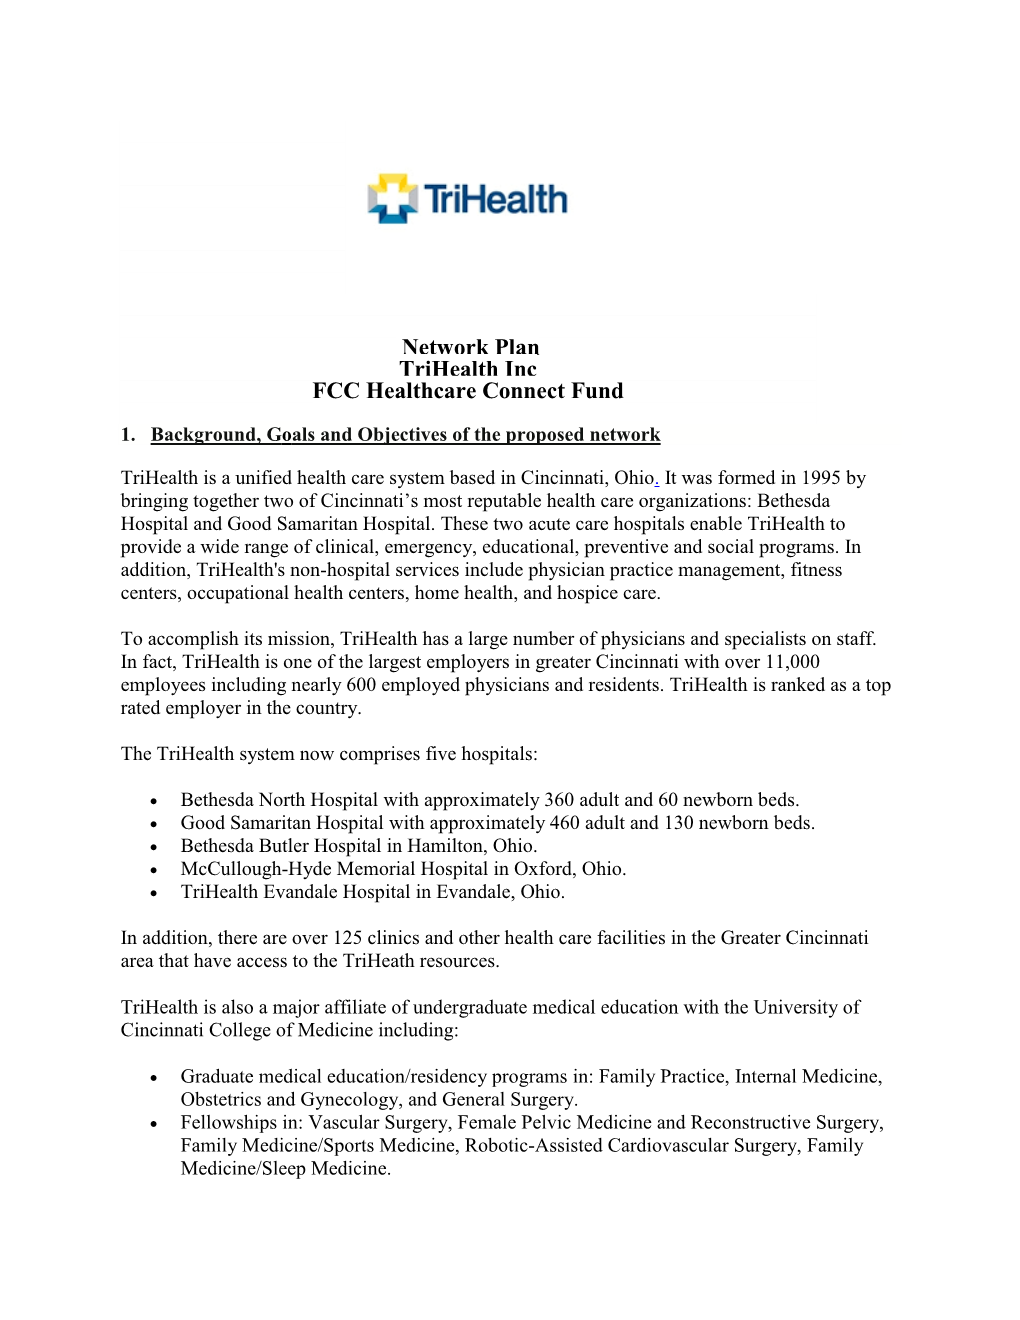 Network Plan Trihealth Inc FCC Healthcare Connect Fund